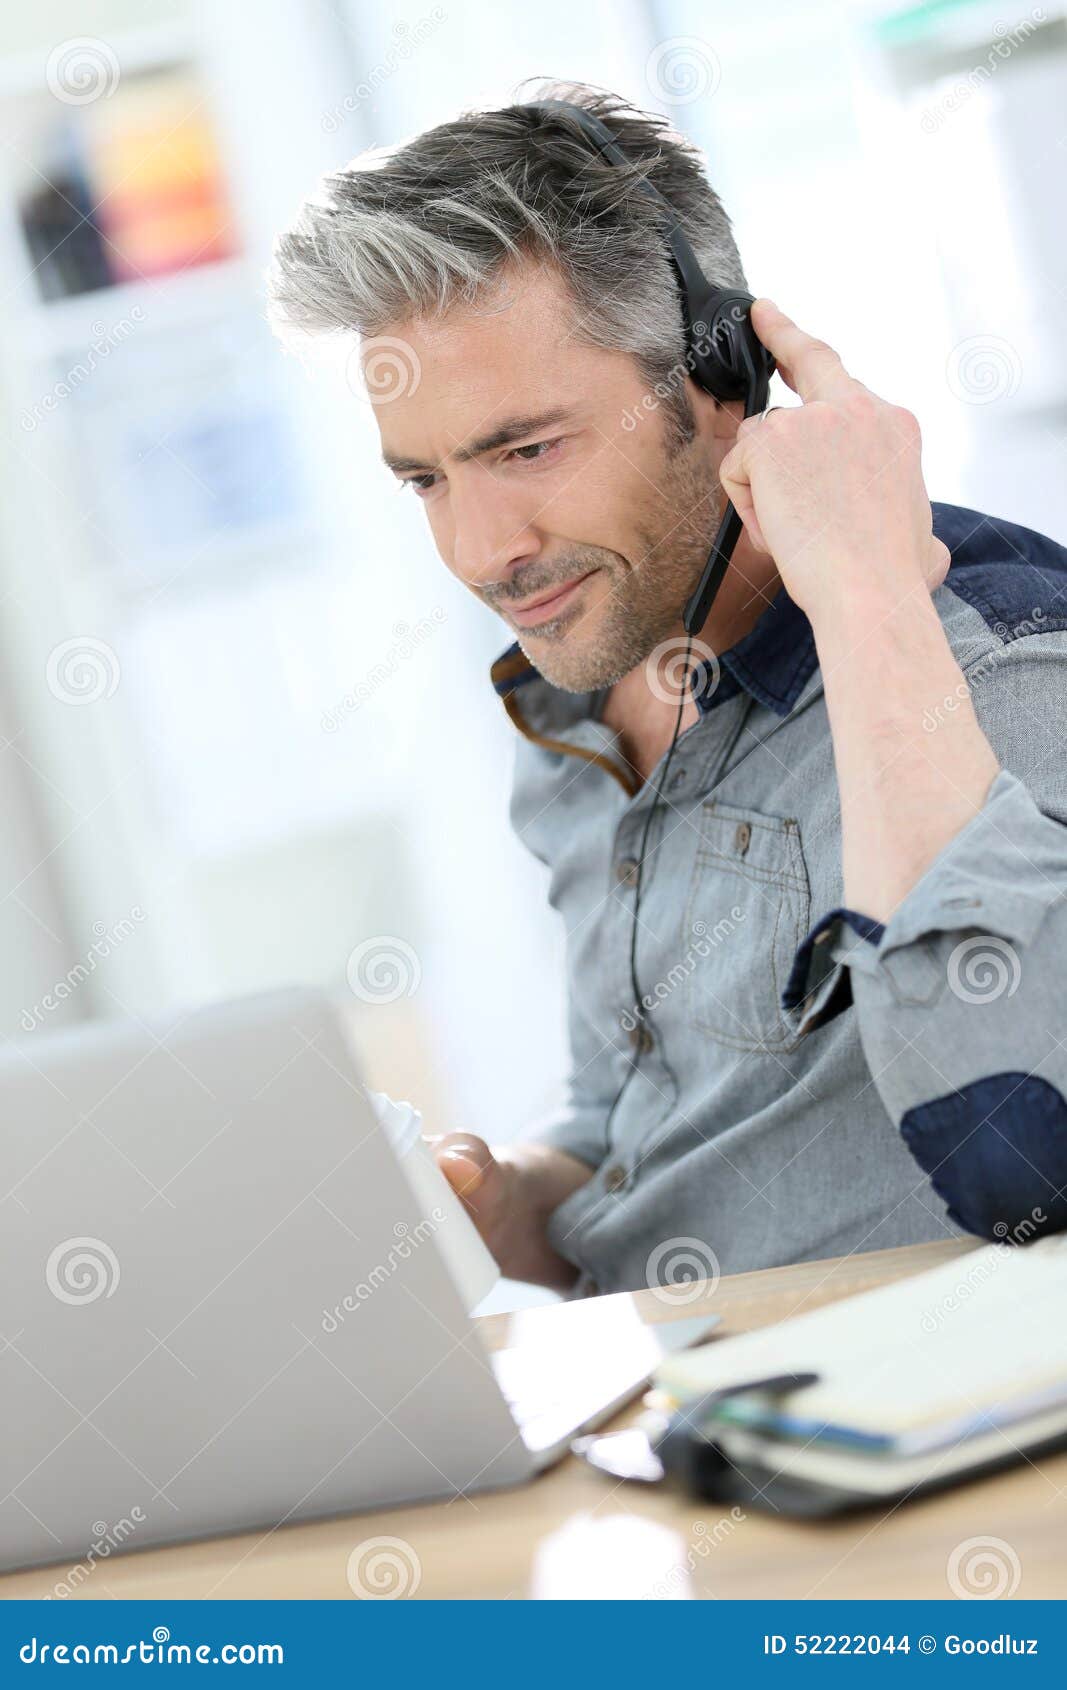 mature man teleworking on laptop using headphones